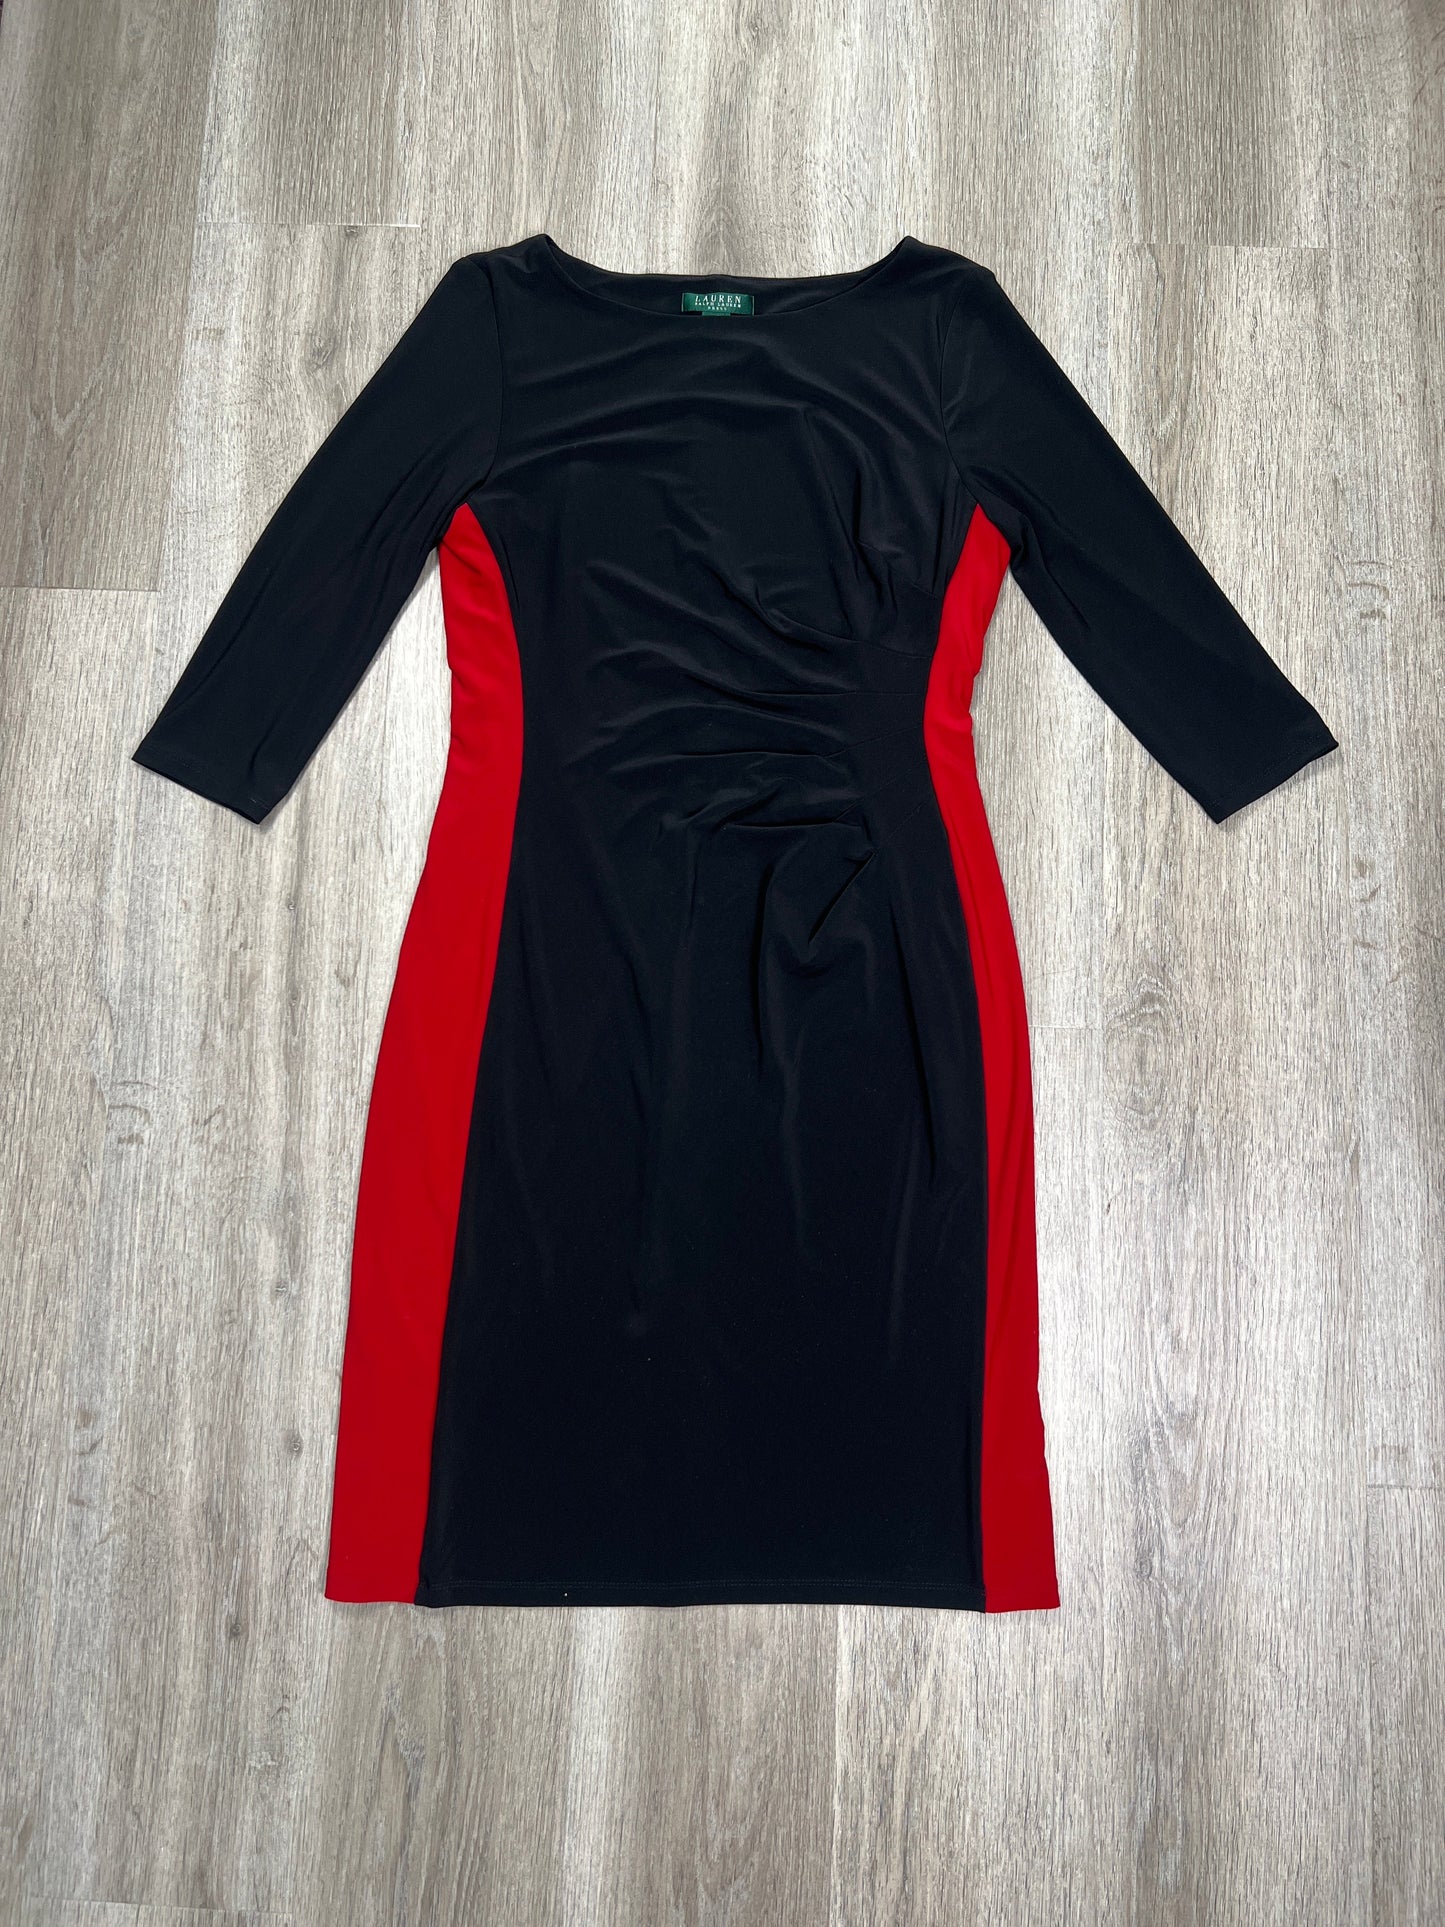 Dress Casual Midi By Lauren By Ralph Lauren  Size: L